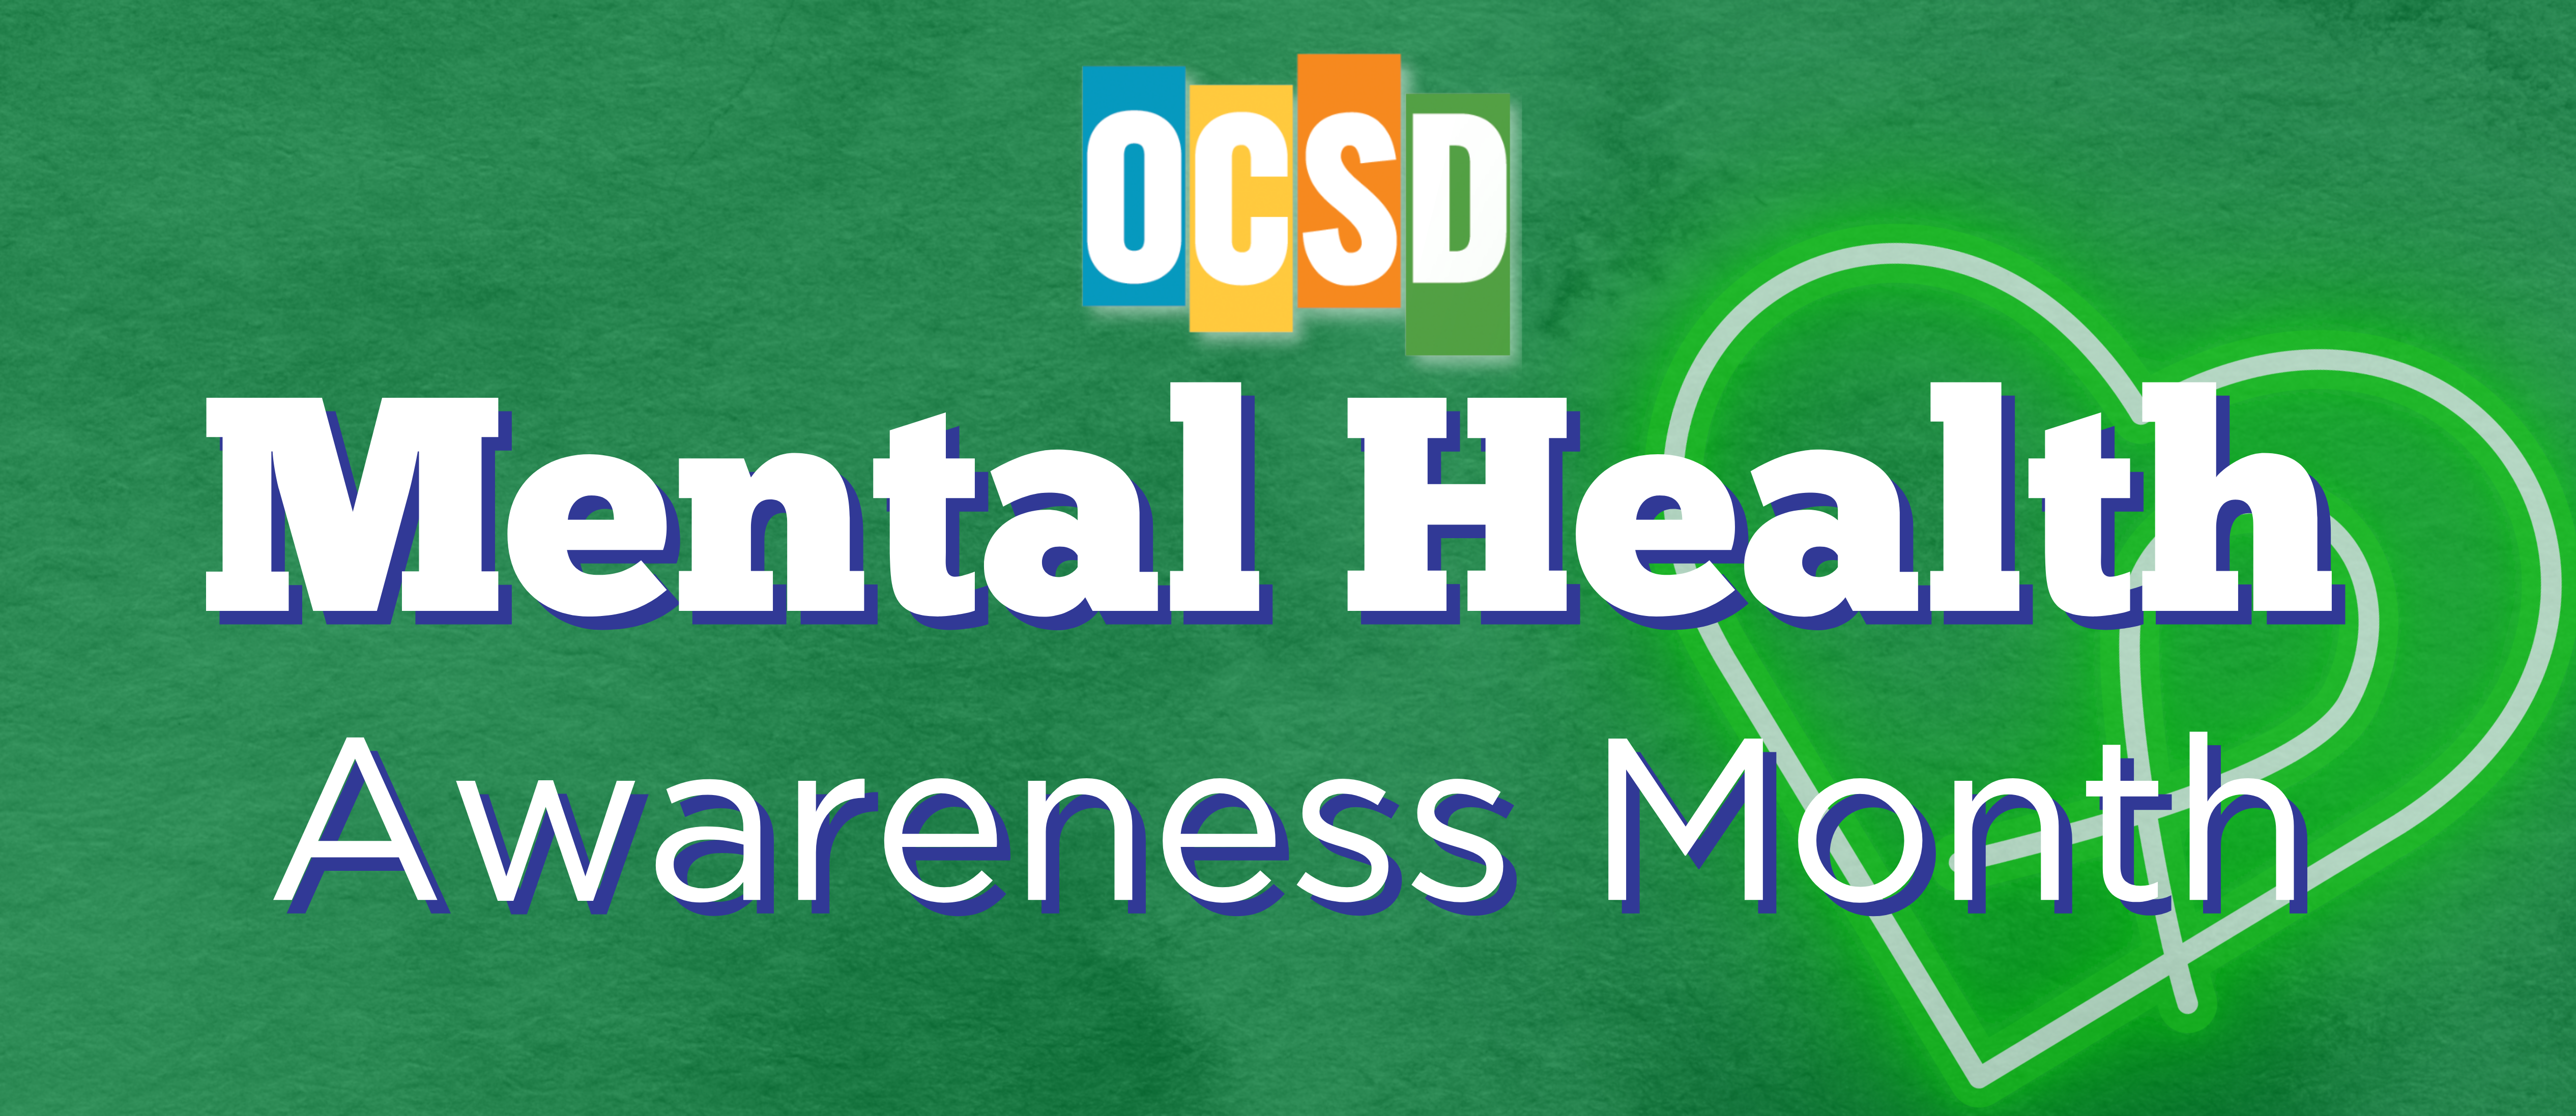 Mental Health Awareness Month OCSD